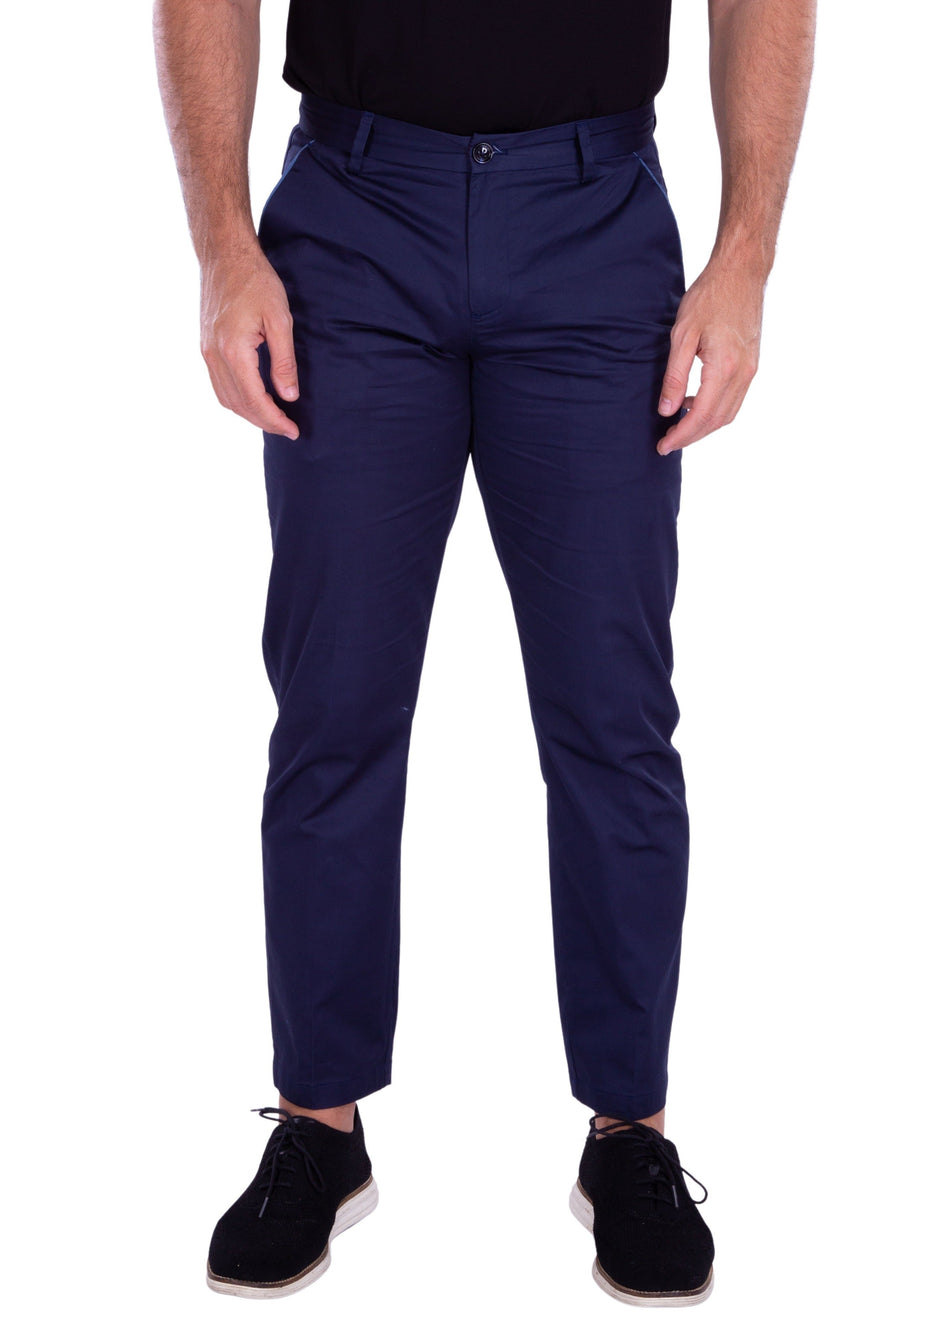 BESPOKE - Navy Pants for Men - 183122 - www.